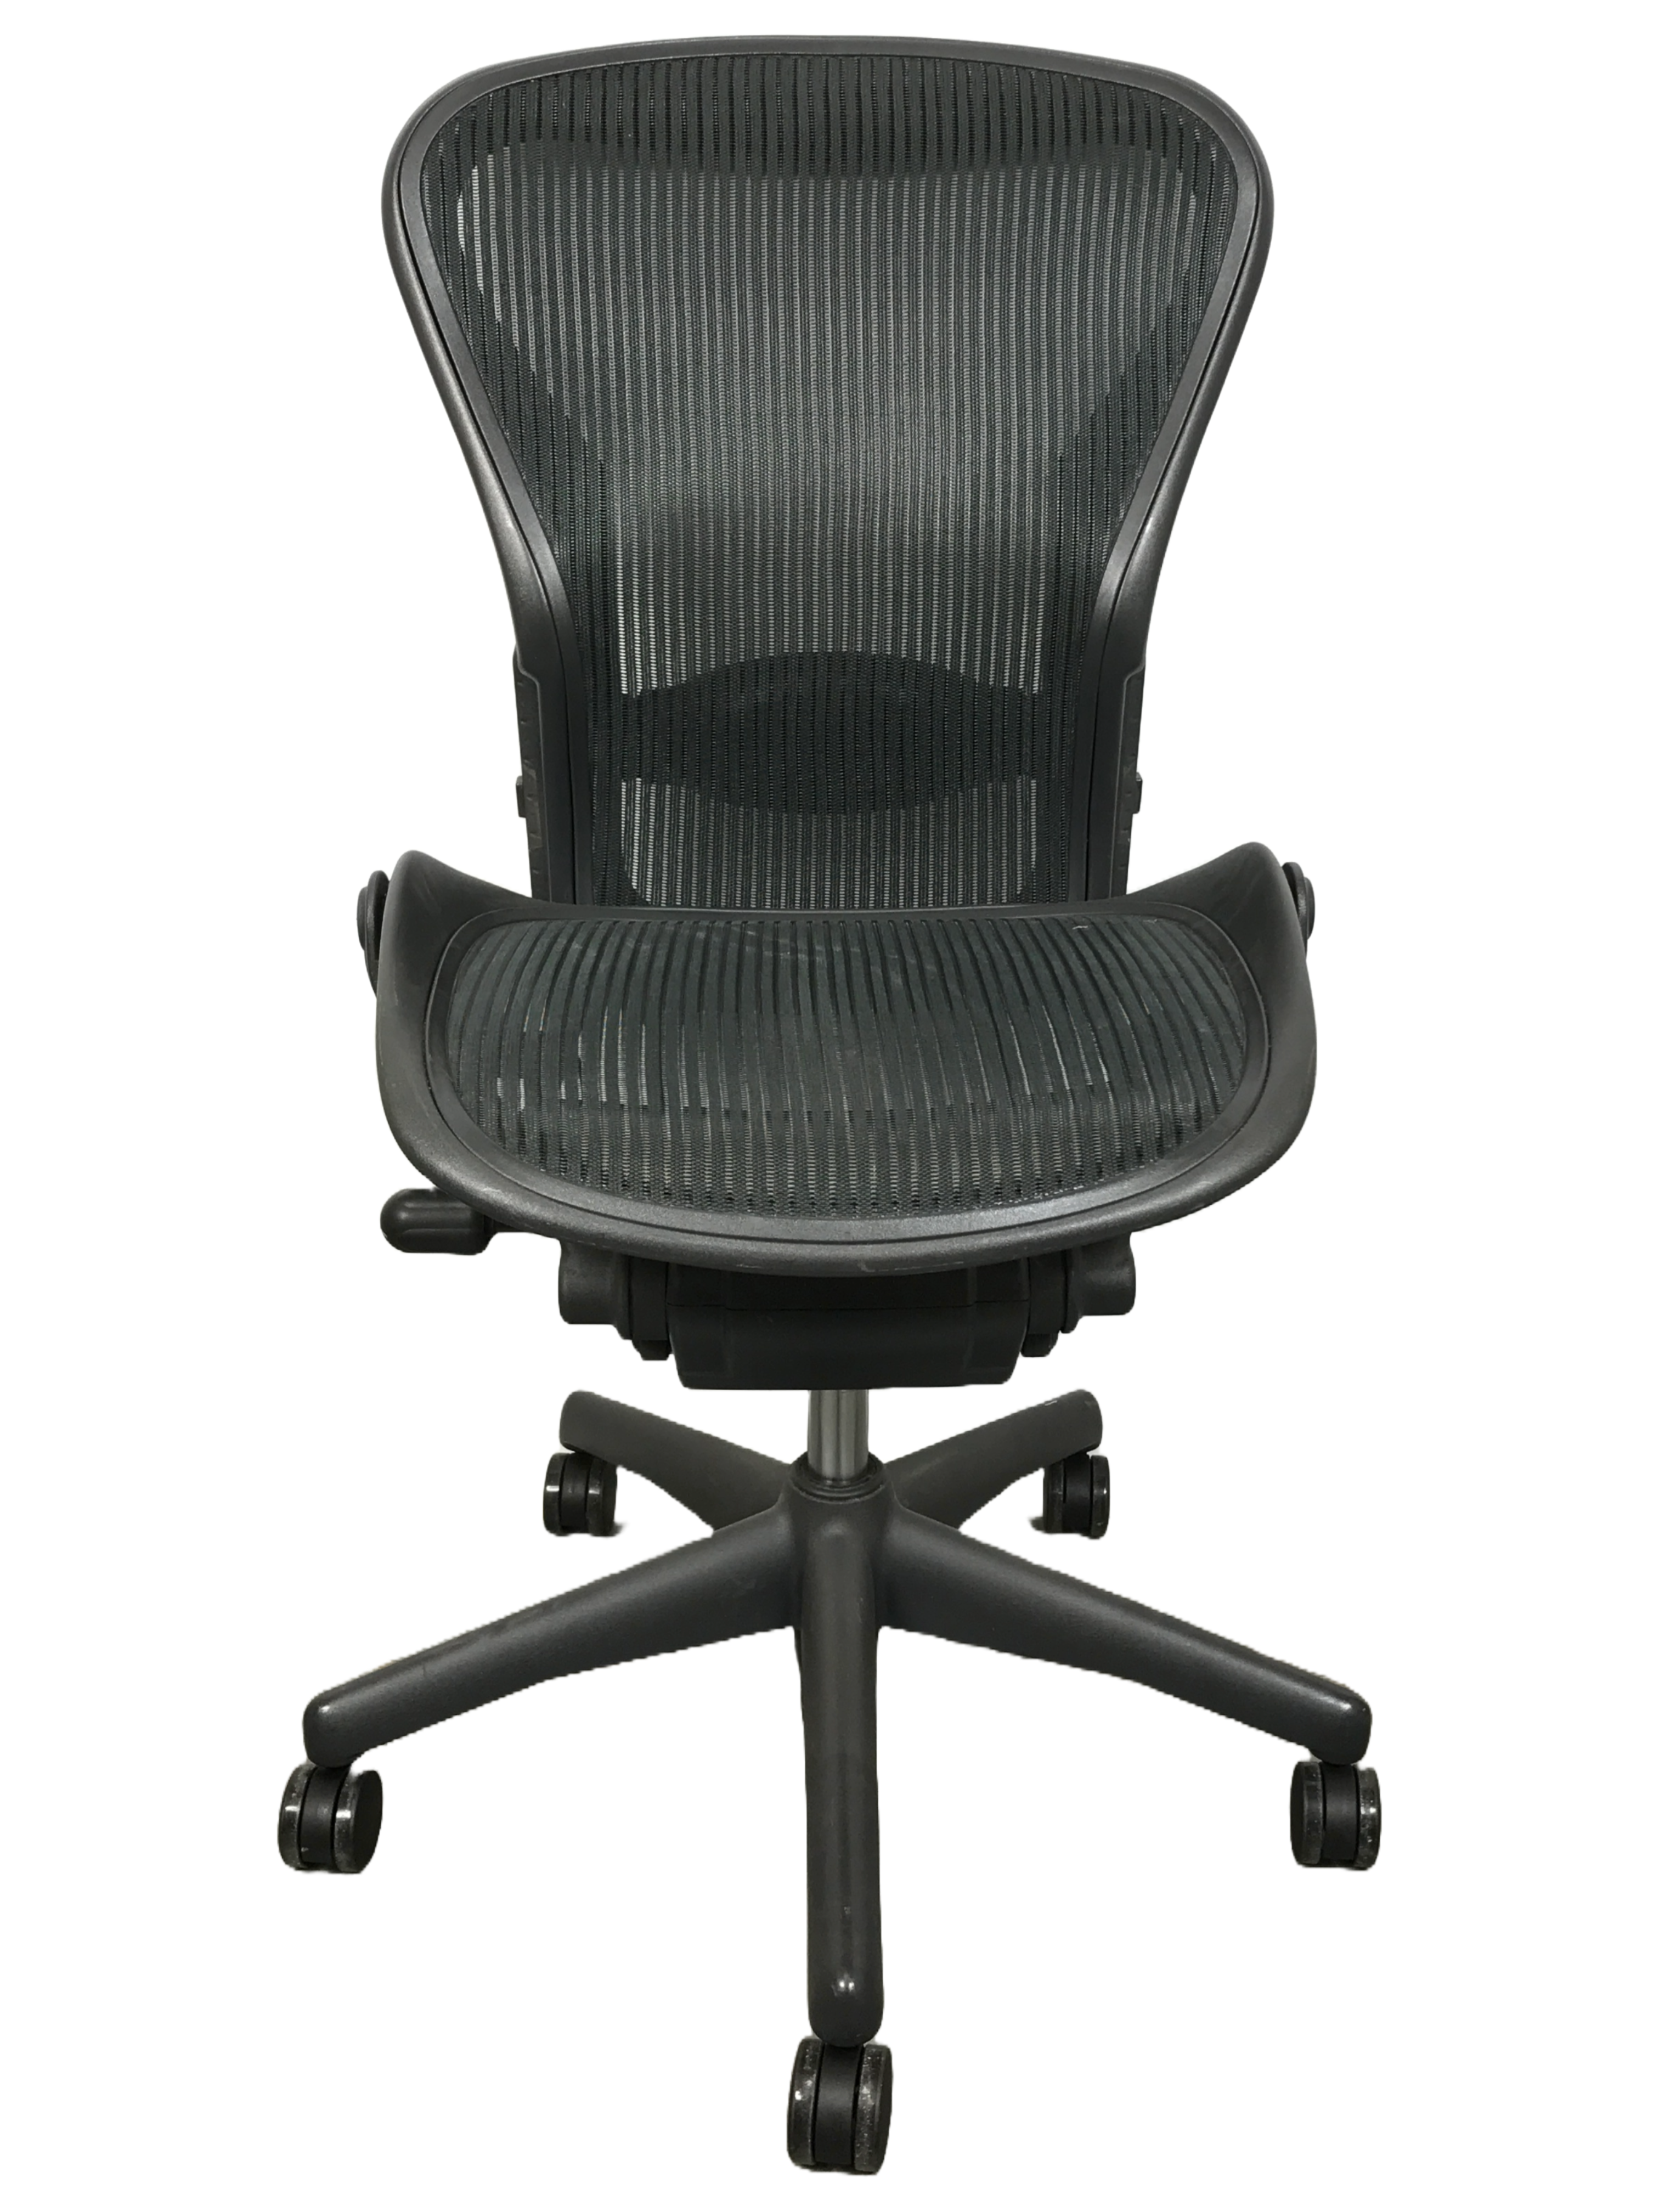 Green Herman Miller Aeron Chair Size B *No Arms*